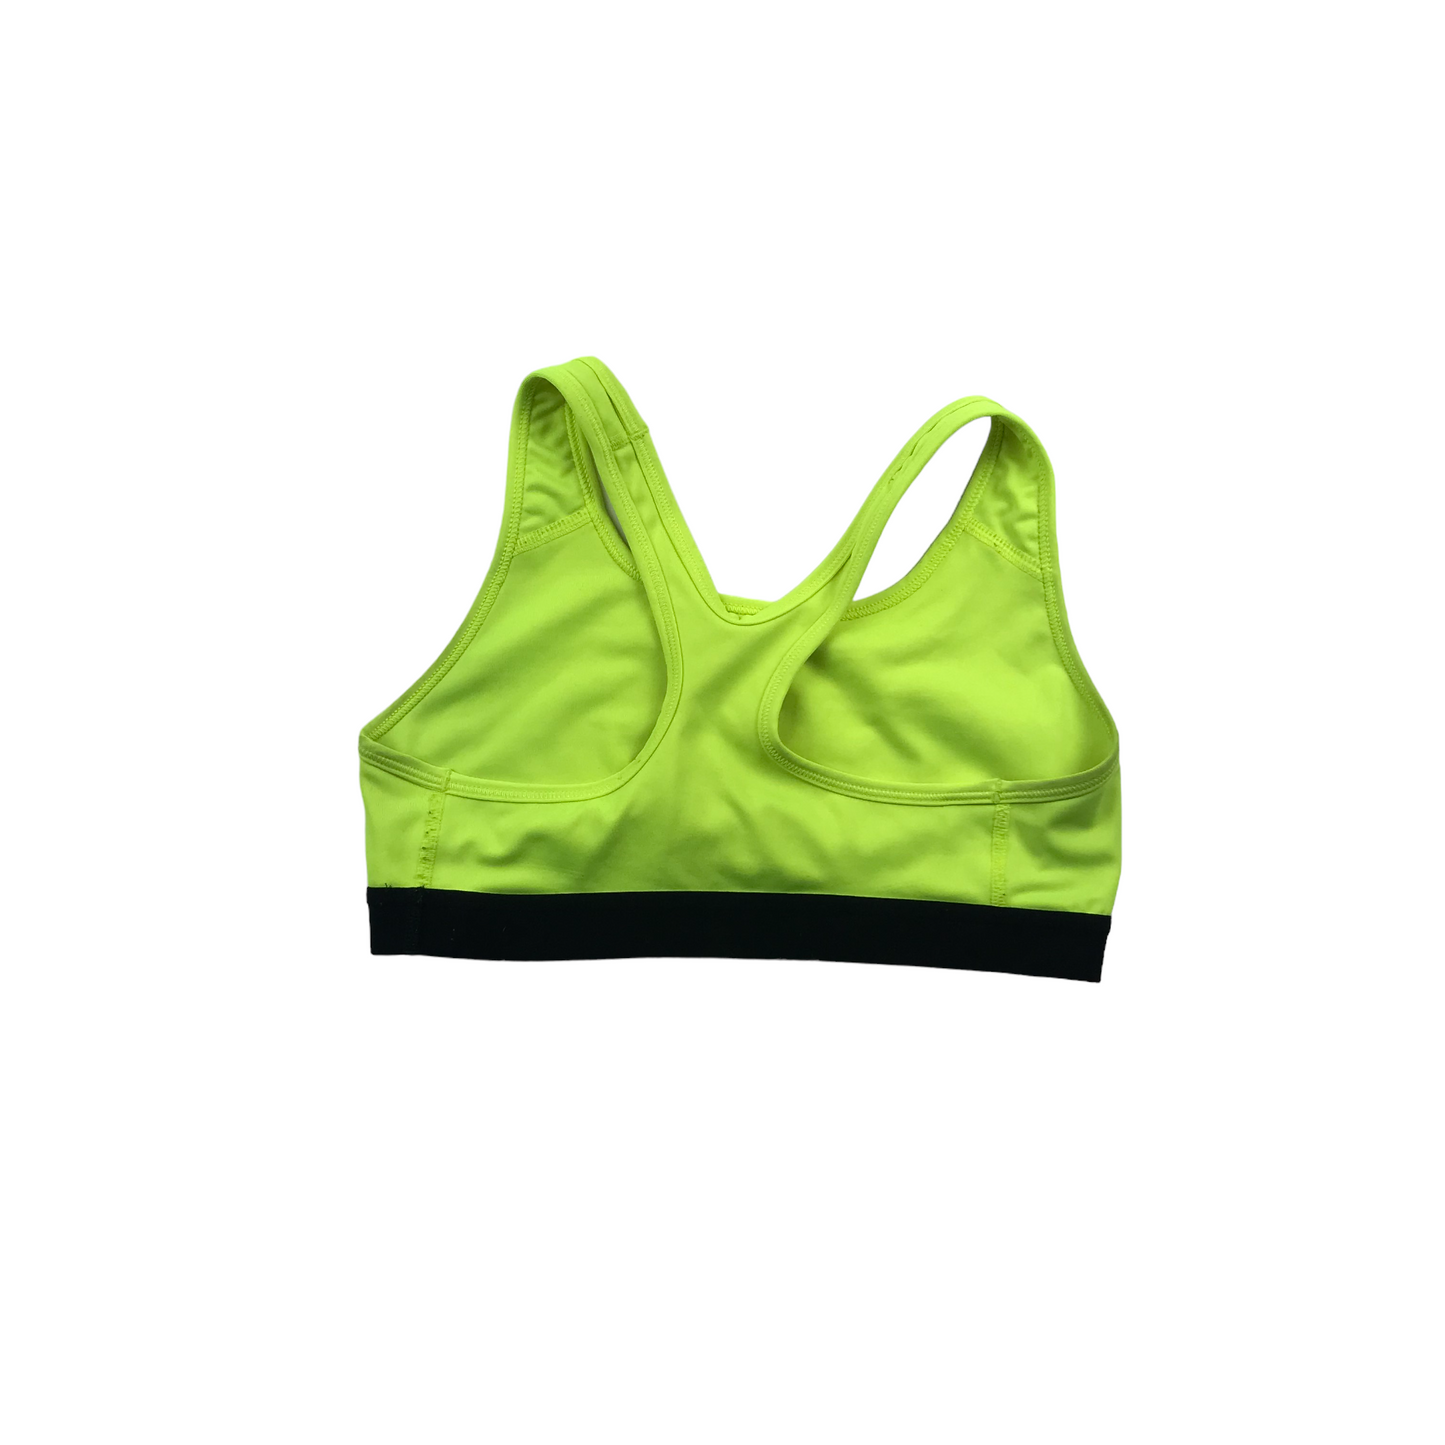 Nike Neon Yellow Sports Crop Top Women's Size S